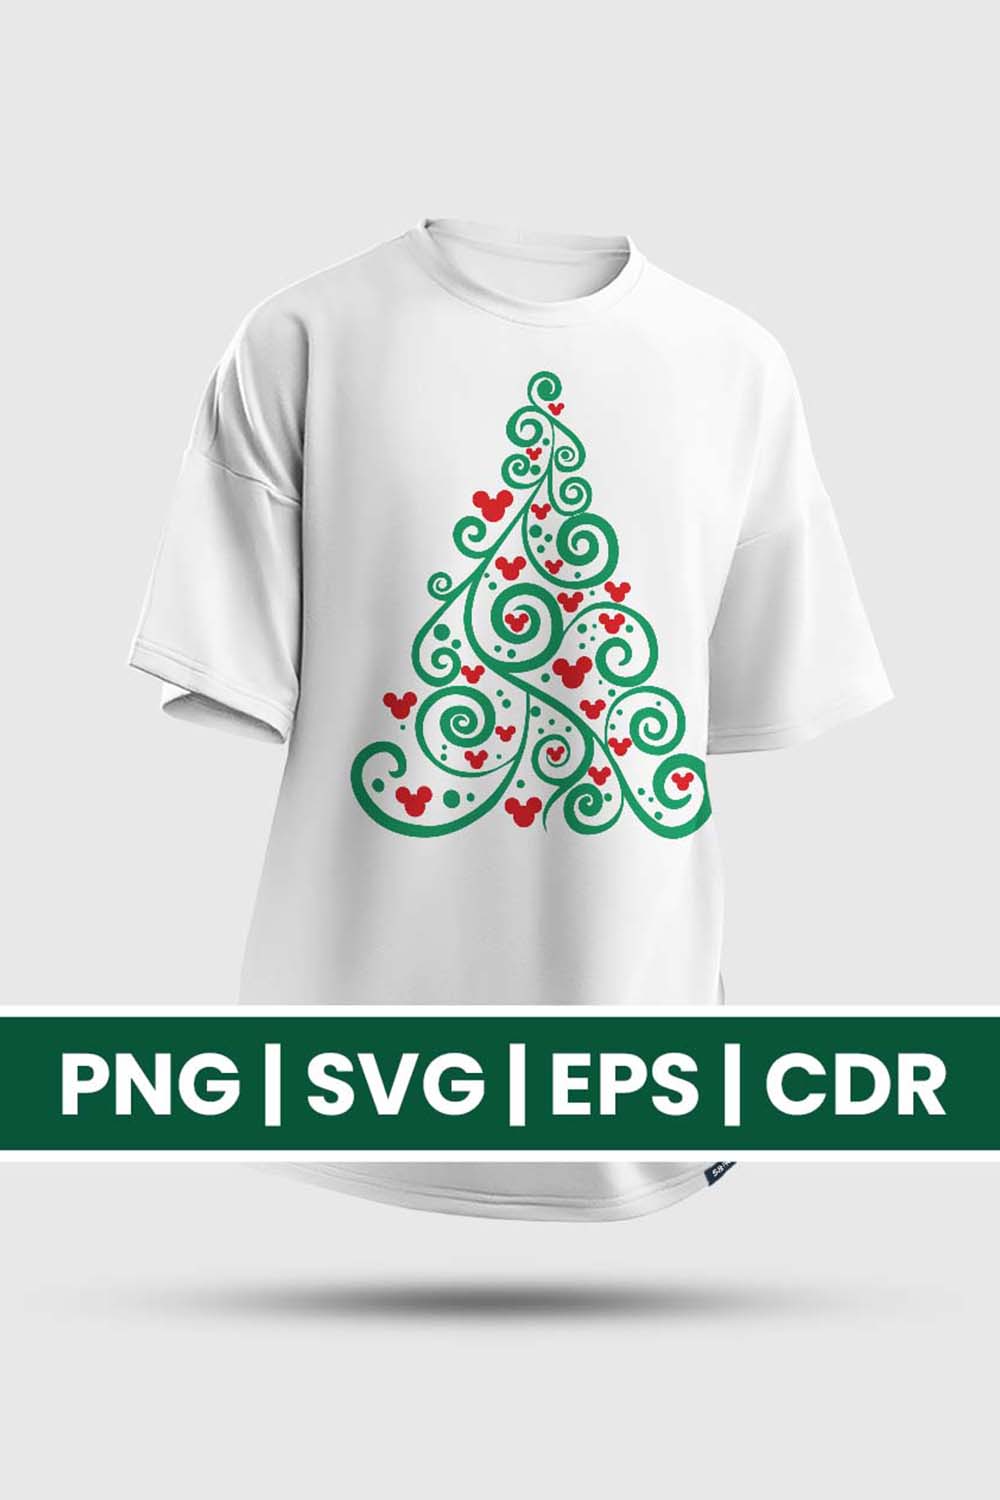 Vector Christmas Tree T-Shirt Design Pinterest image.